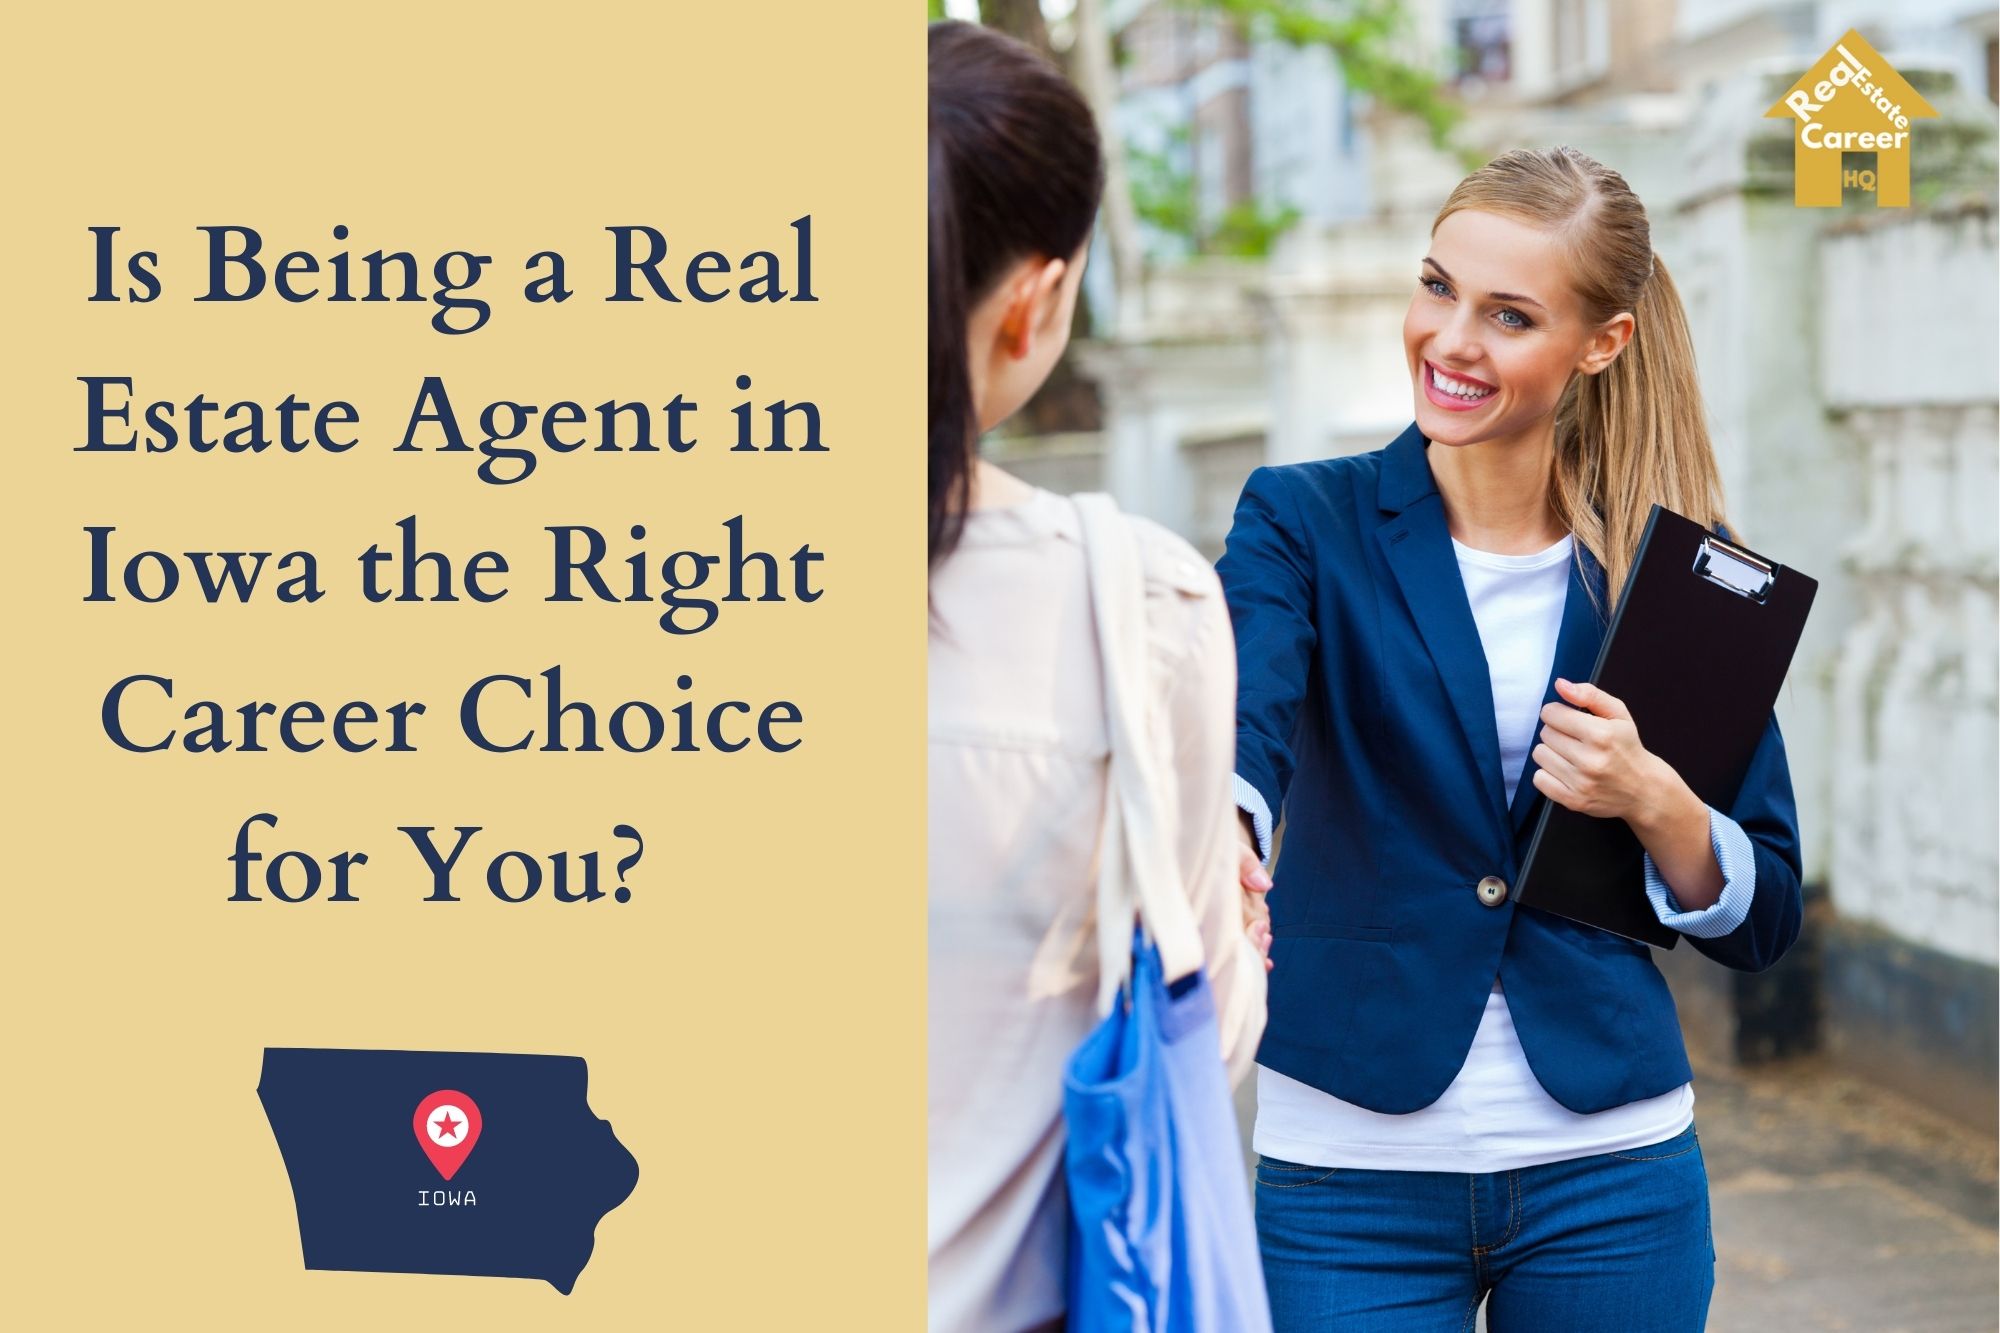 Iowa Real Estate Agent Career